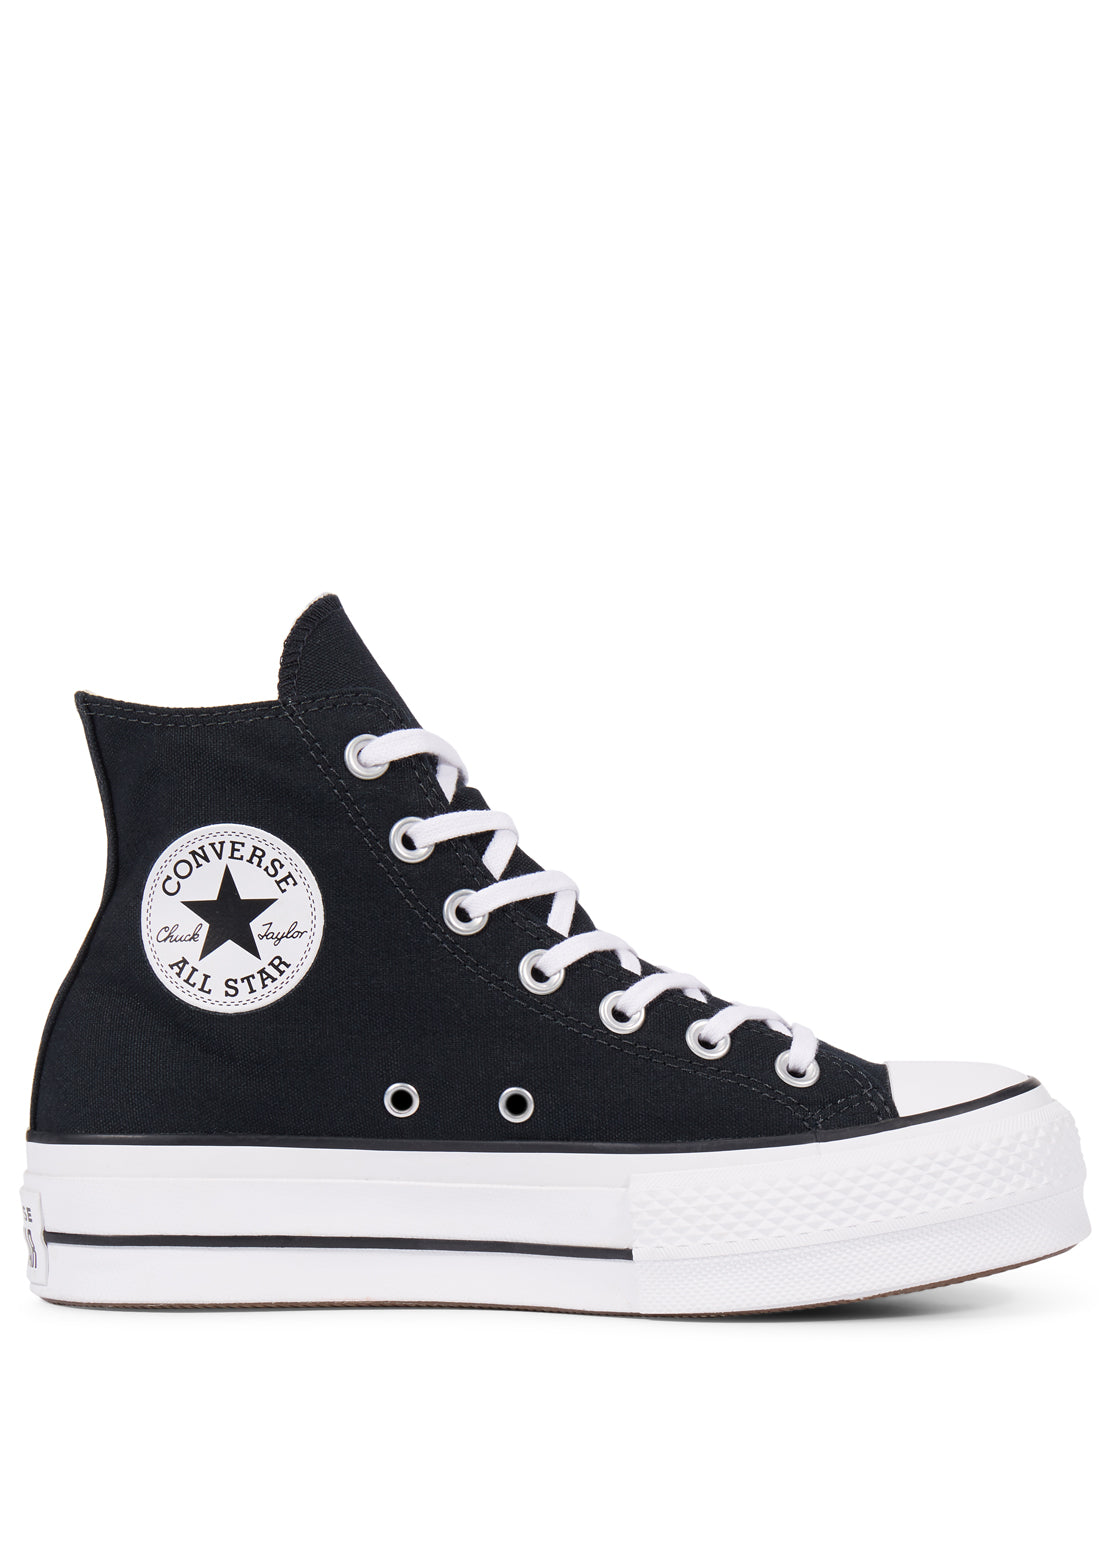 Converse Women’s Chuck Taylor All Star Lift Hi Top Shoes Black/White/White